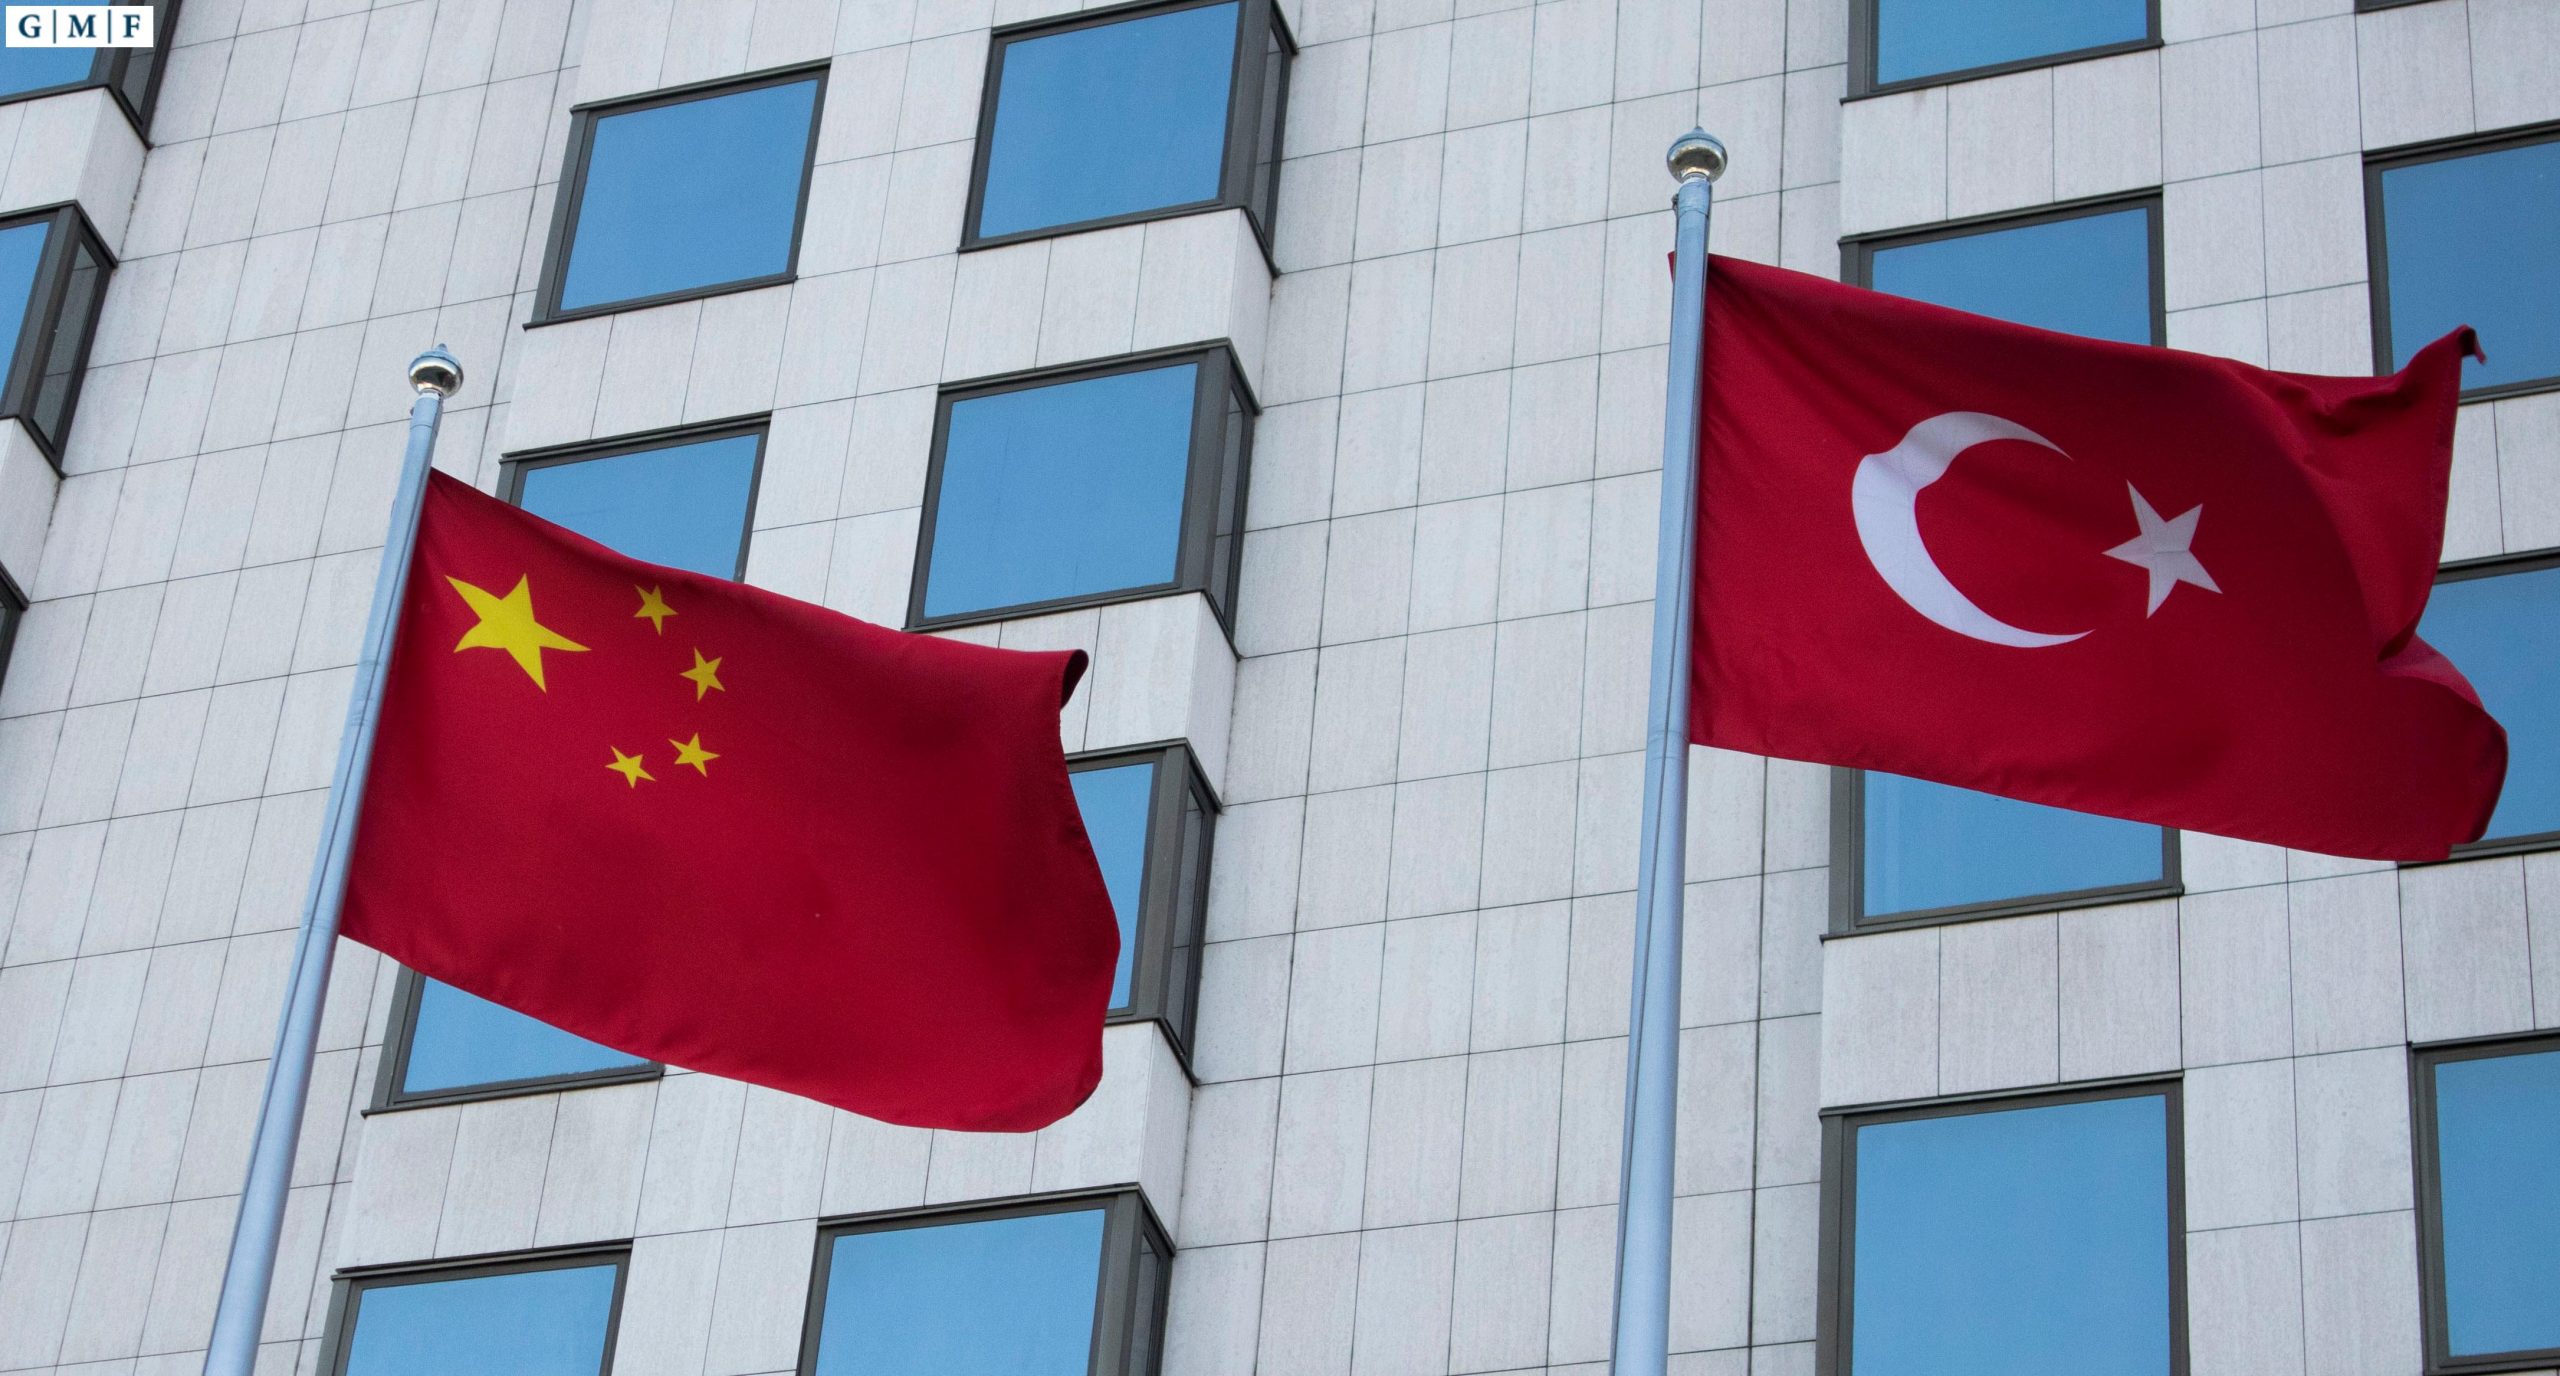 New world order: China and Turkey want to mediate Ukraine crisis 25